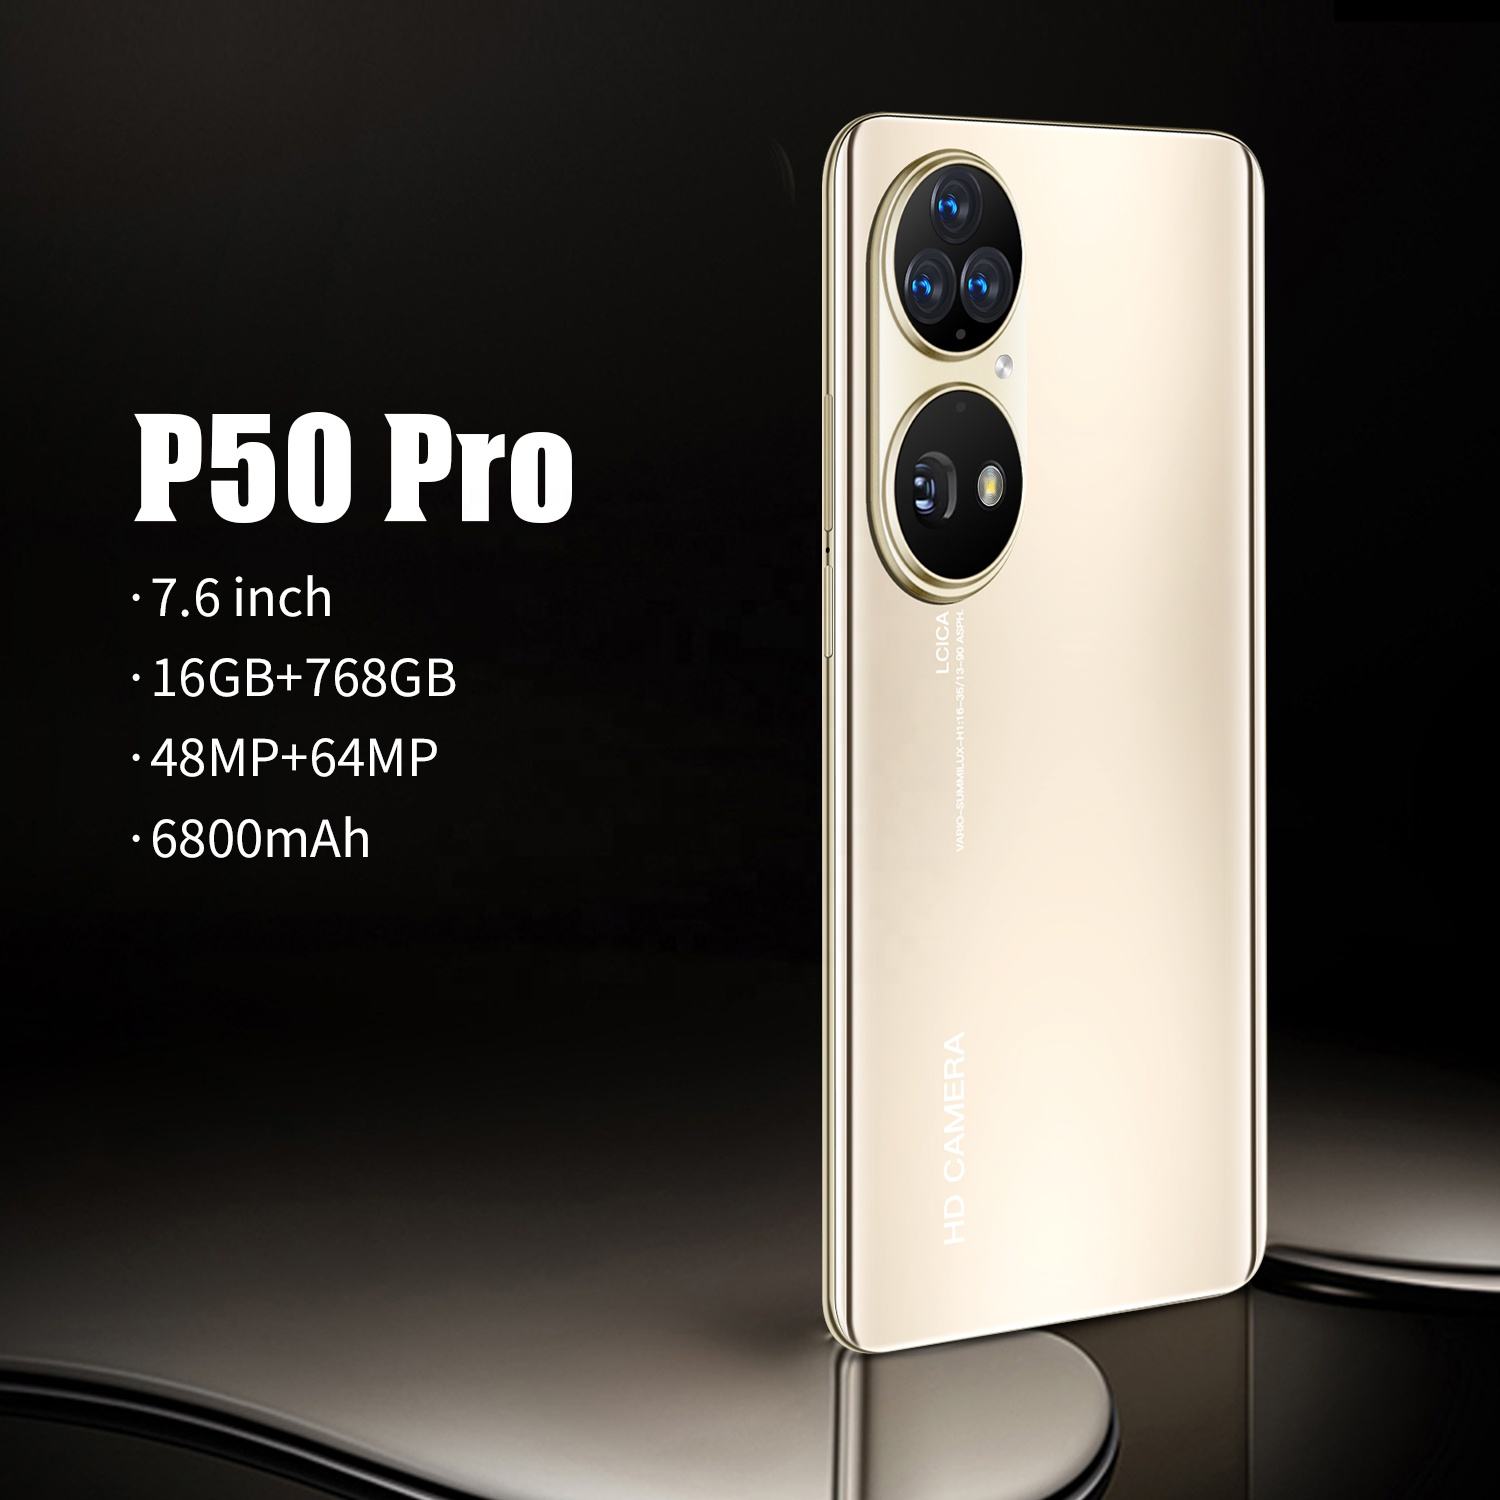 Hot Sale P50Pro Original Unlocked Smartphone 7.6-inch 16+768GB smart phone Dual 